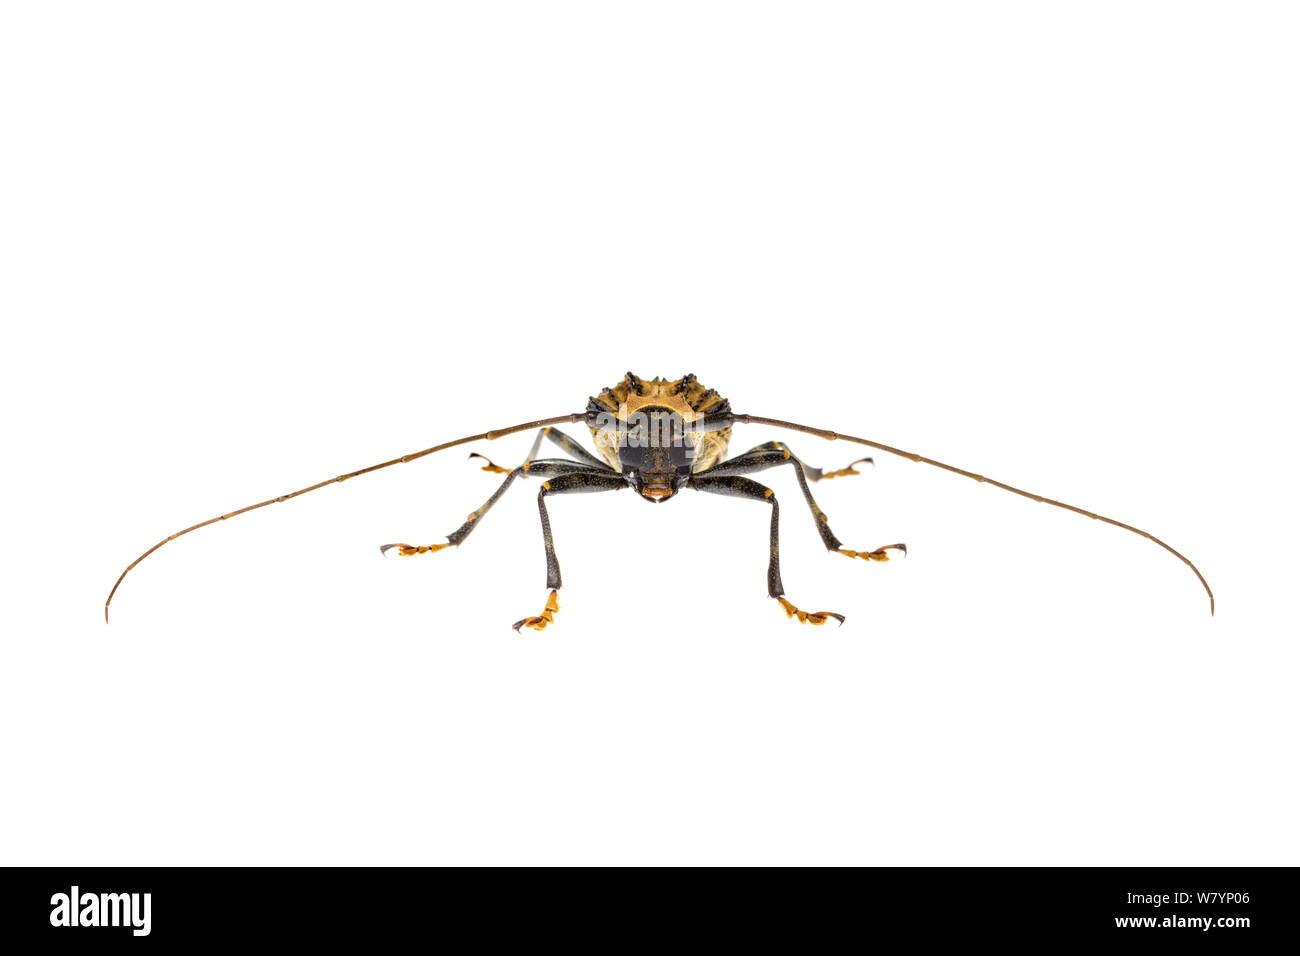 Longhorn beetle (Polyrhaphis peruana), Station biologique Jatun Sacha, province de Napo, Amazonie, Equateur, mars. meetyourneighbors.net project Banque D'Images